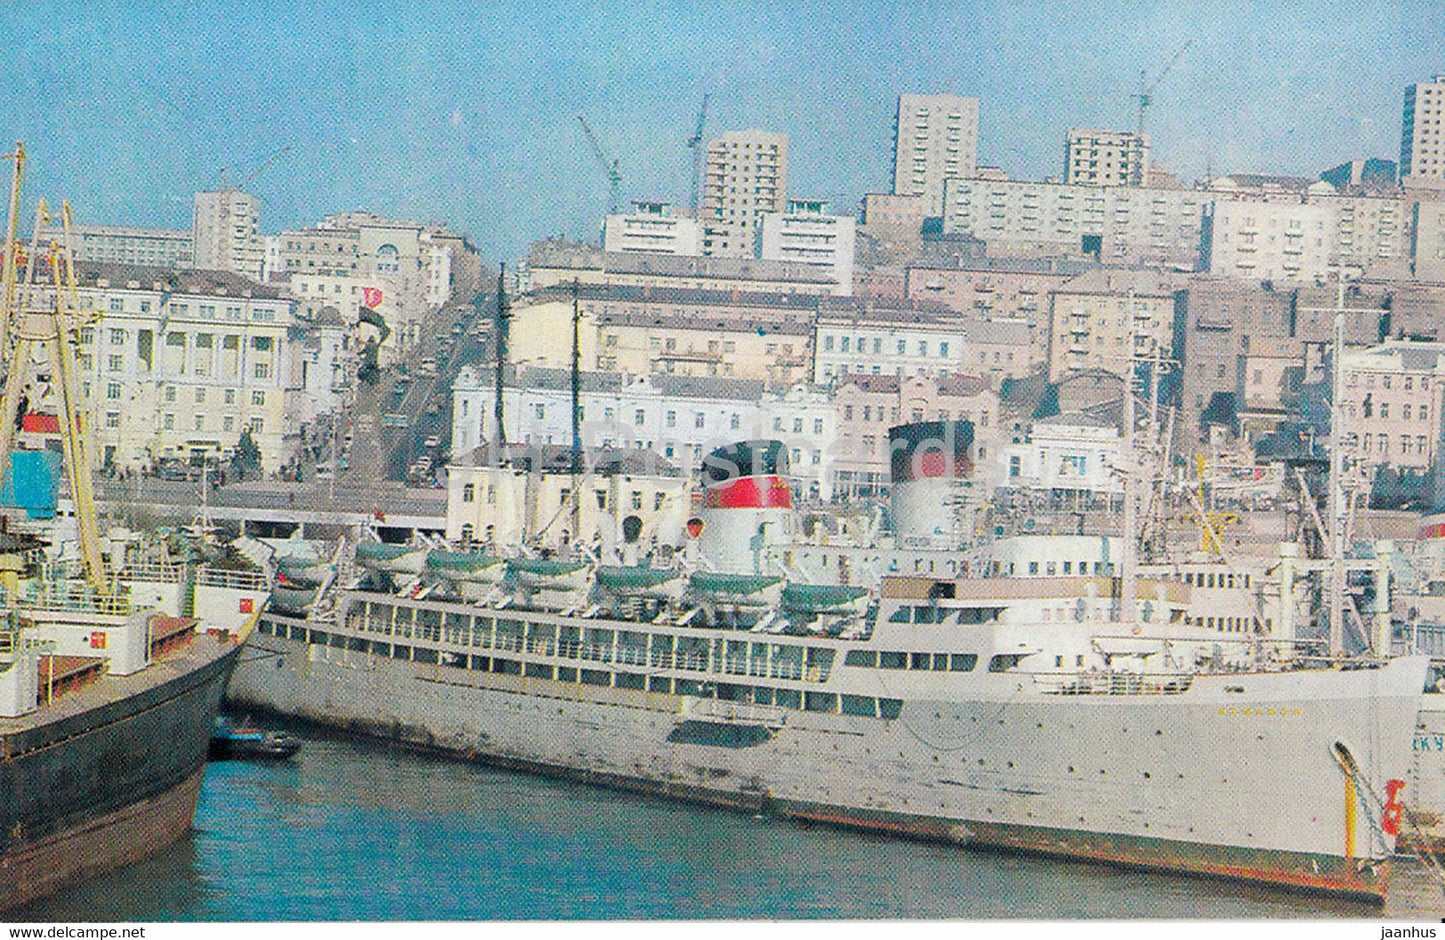 Vladivostok - at the seaport berths - ship - 1973 - Russia USSR - unused - JH Postcards